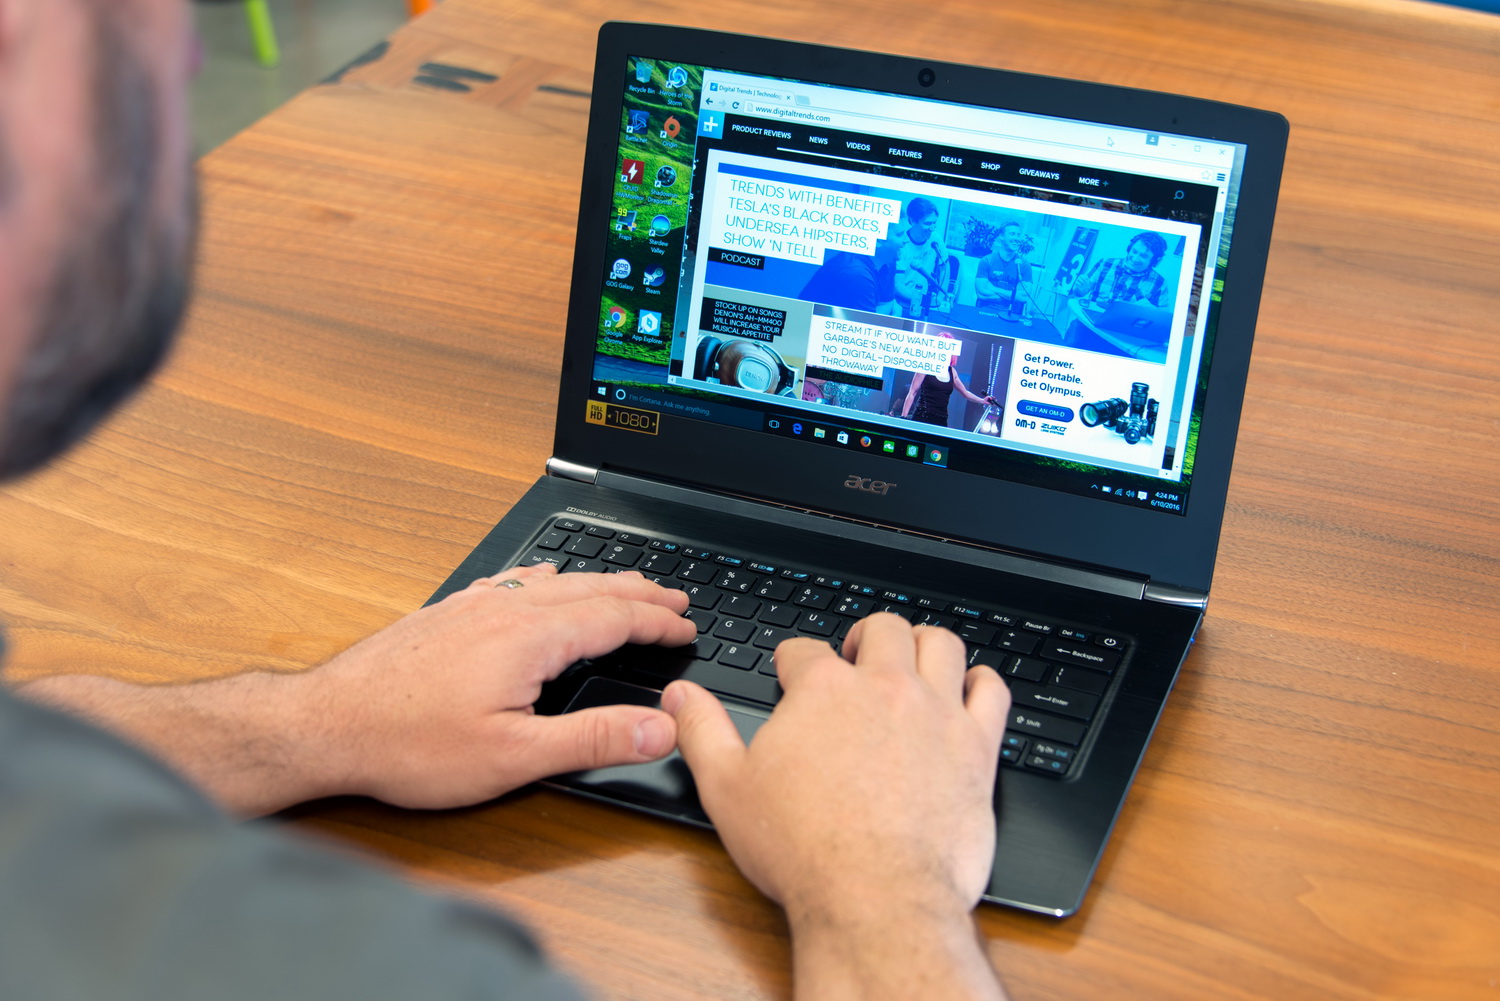 Acer Aspire S 13 (2016) Review | Digital Trends